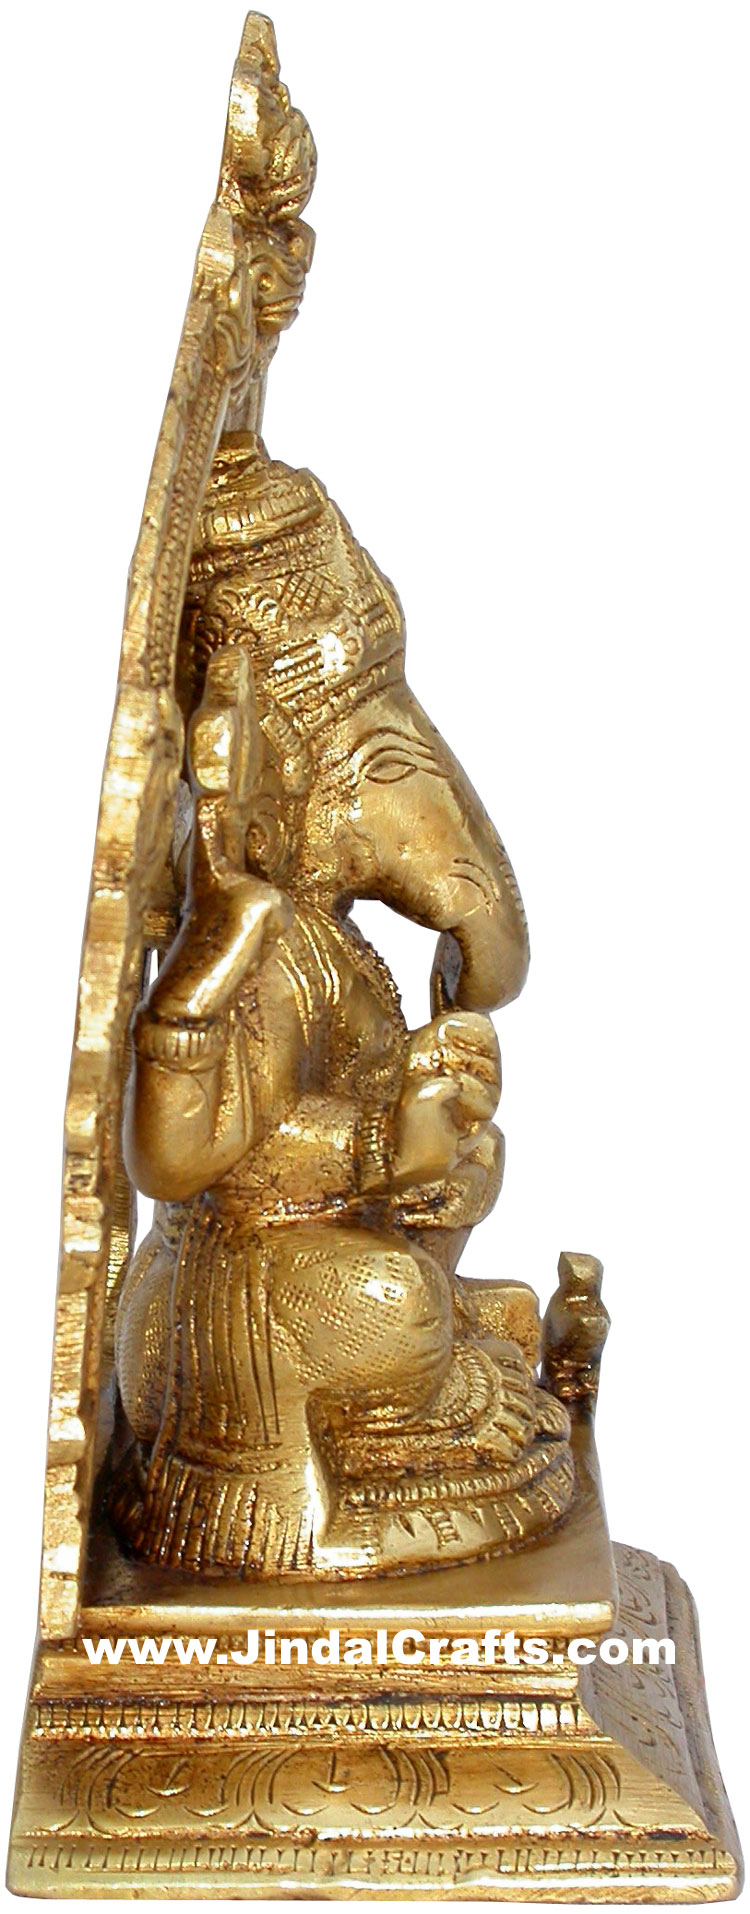 Handmade Brass Statue of God Ganesha India Brassware Handicraft Art Craft